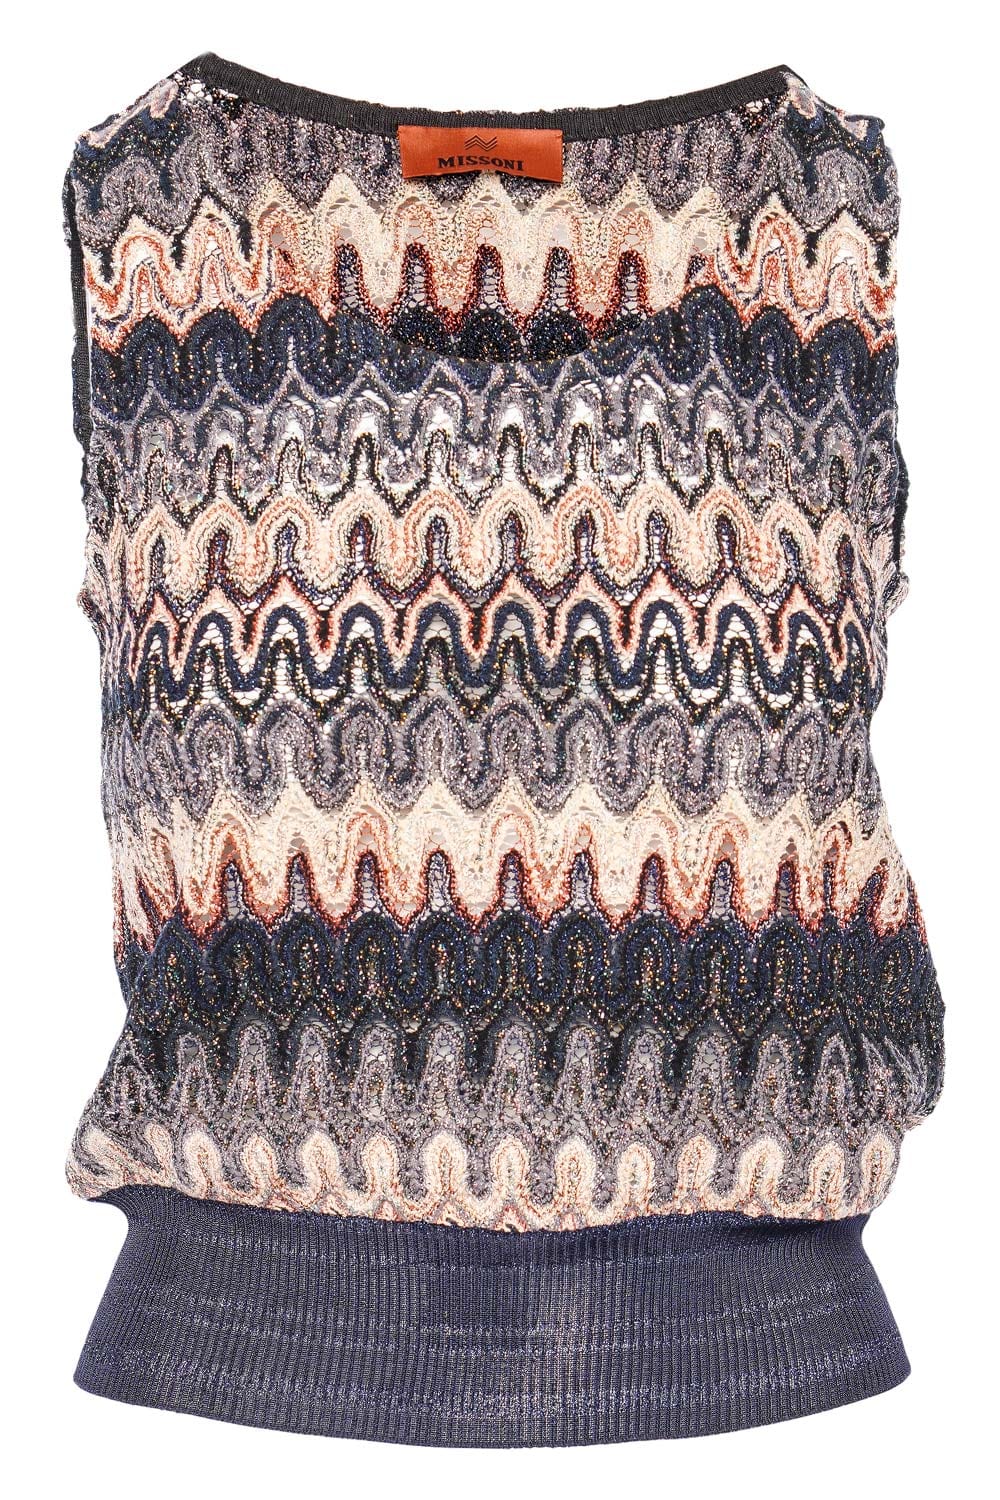 Missoni Dark Multi Sleeveless Knit Tank Top